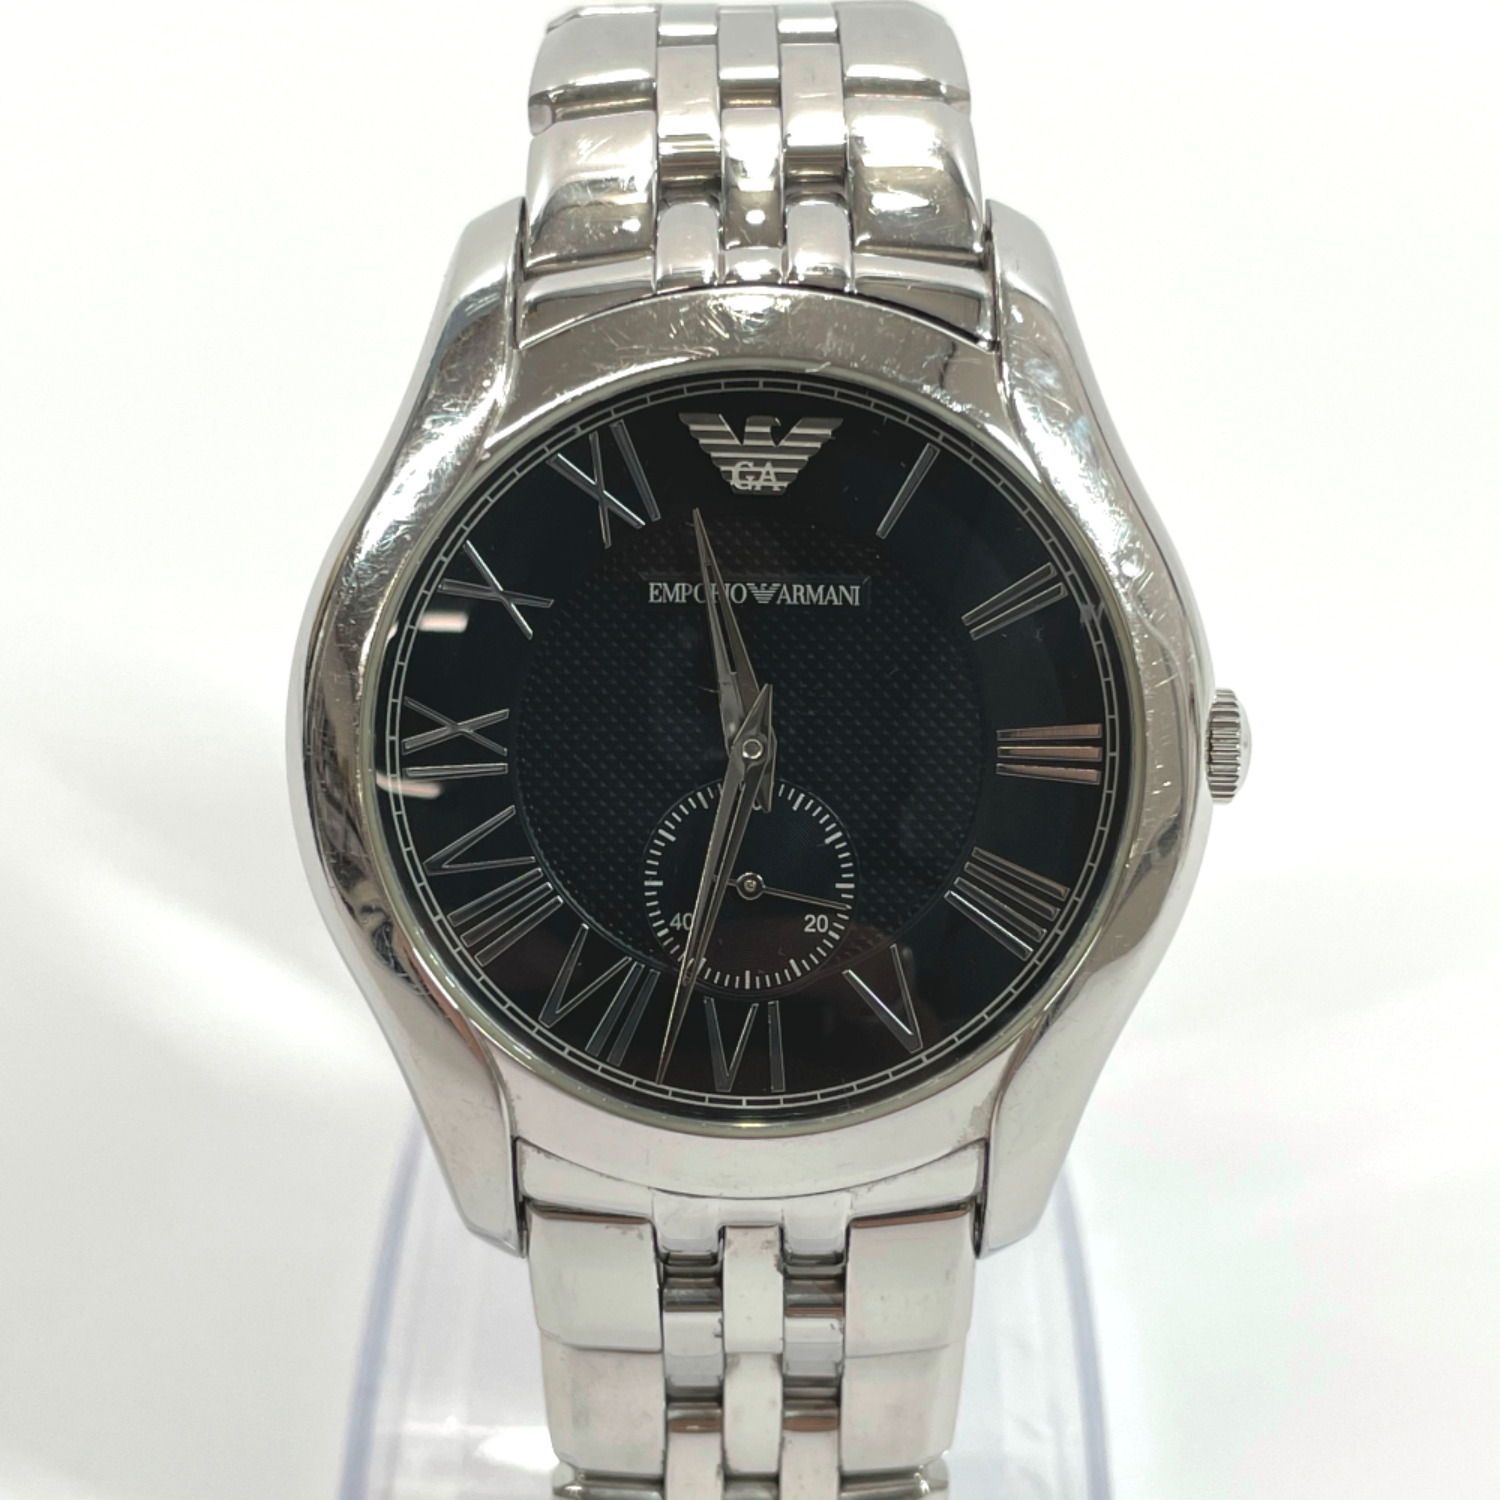 Emporio Armani Watches AR-1706 quartz Stainless Steel mens blackDial | eBay